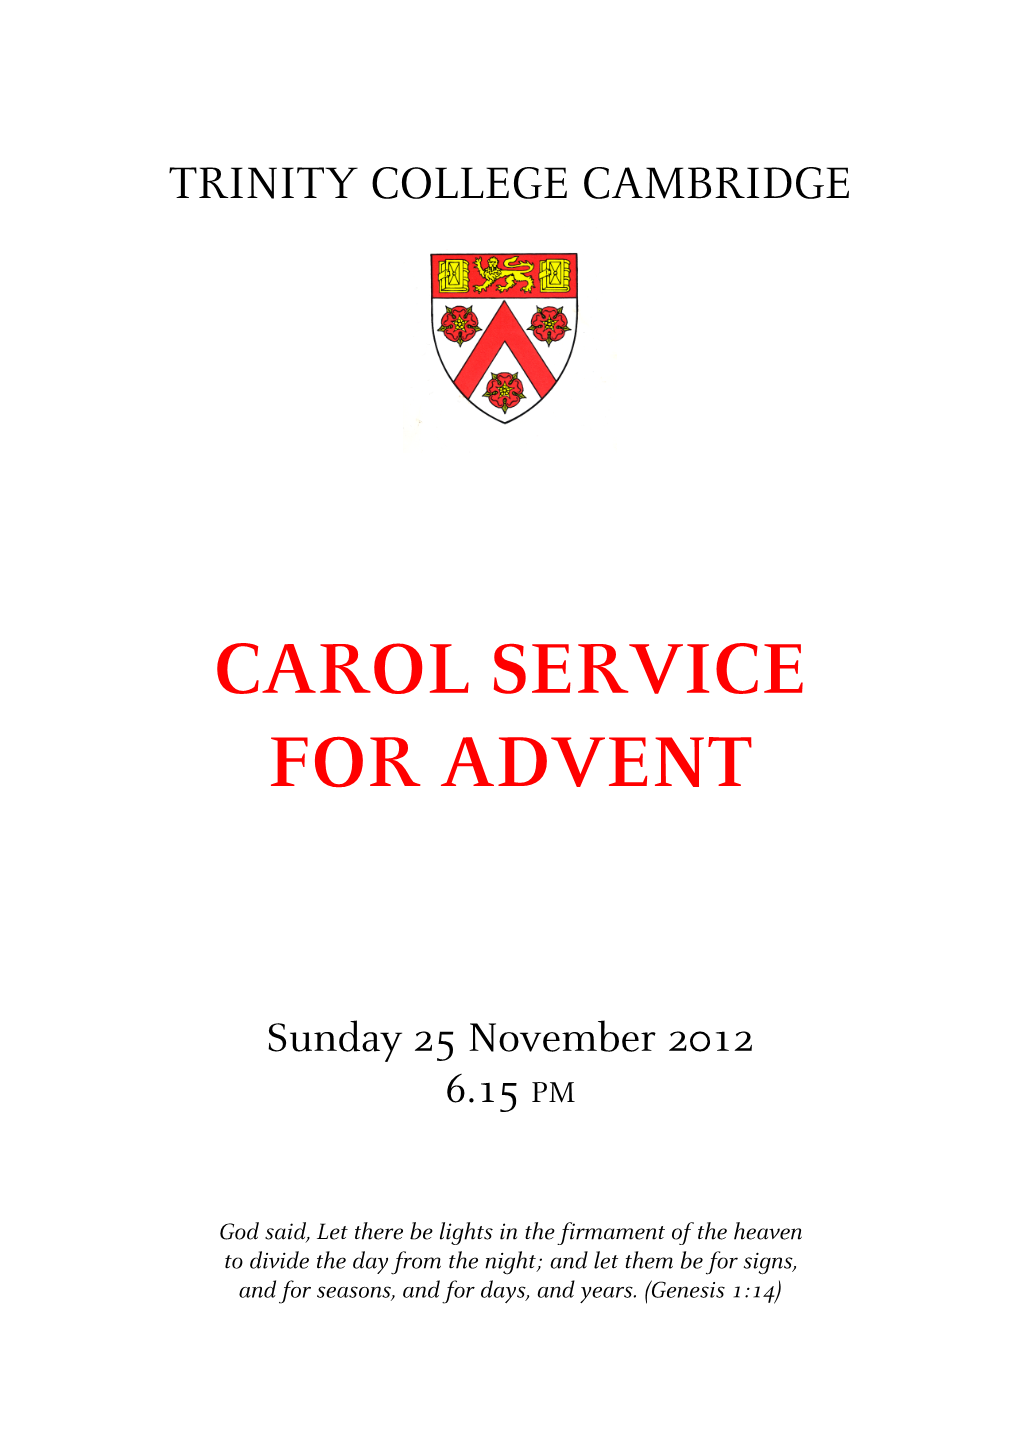 Carol Service for Advent